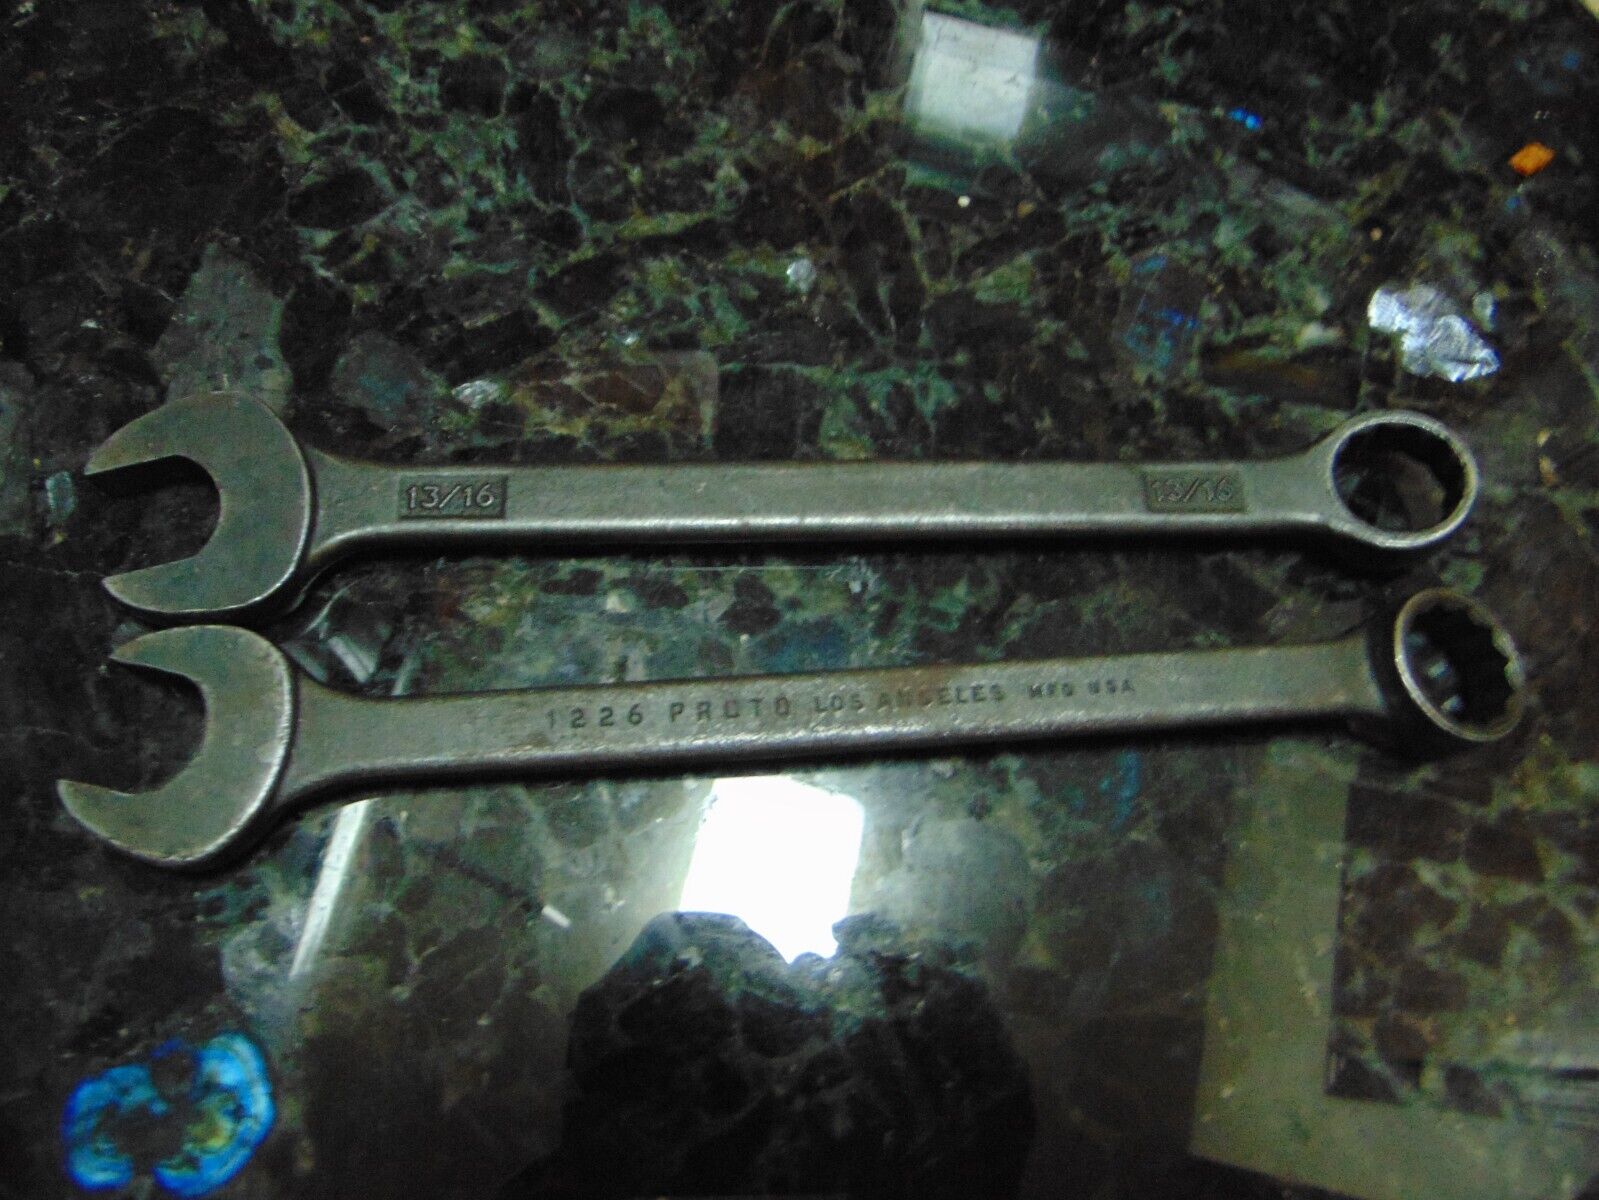 1 Vintage Proto Los Angeles 1226 13/16 Pebble Combination Combo Wrench USA Tool